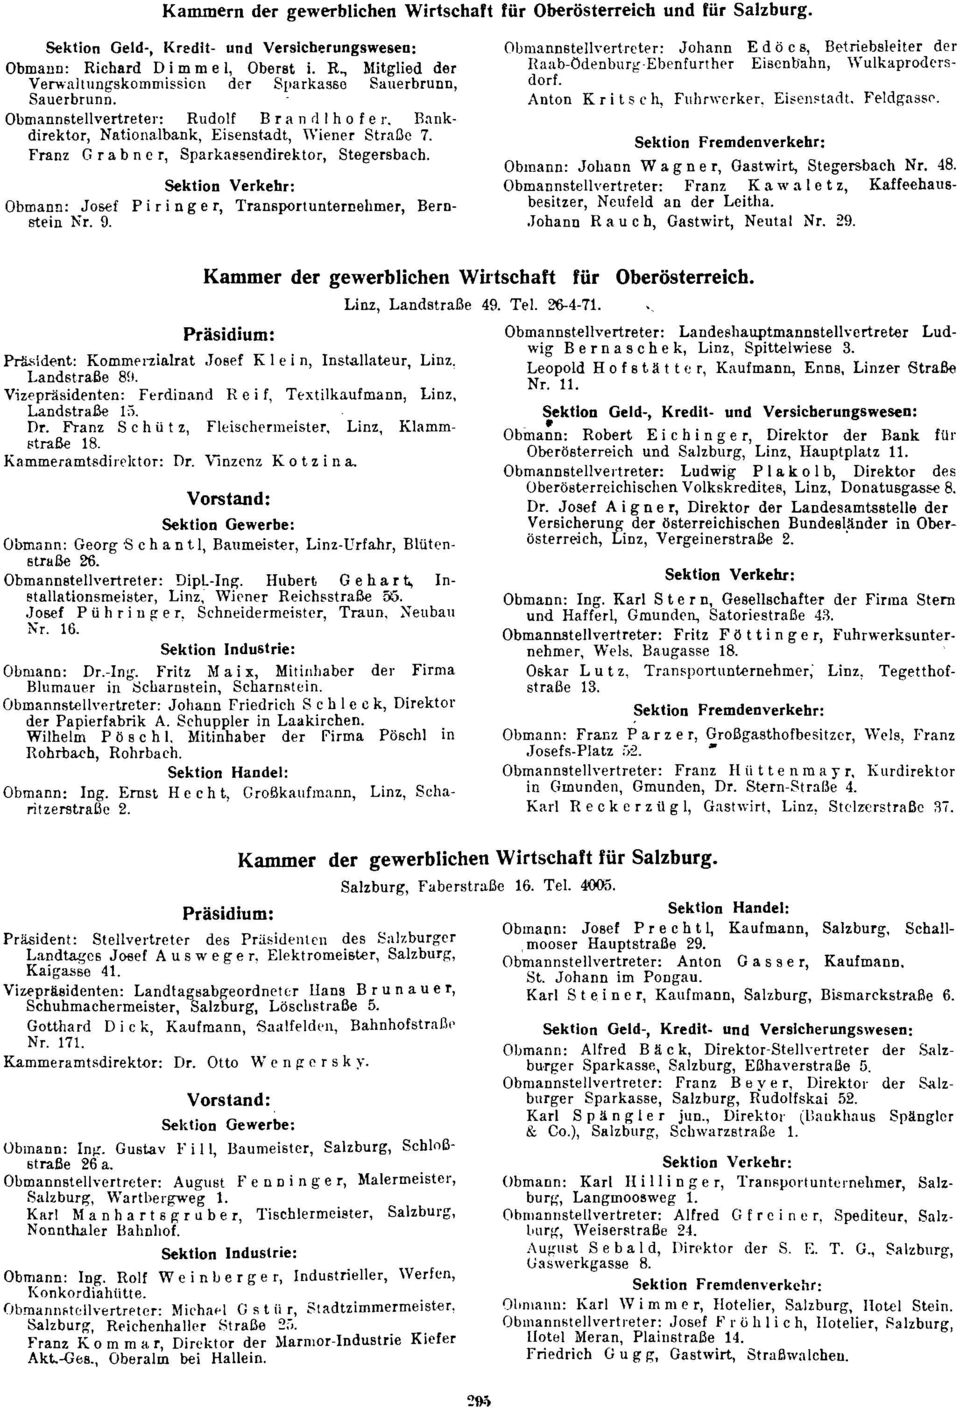 Franz G r a b n e r, Sparkassendirektor, Stegersbach. Sektion Verkehr: Obmann: Josef Piringer, Transportunternehmer, Bernstein Nr. 9.